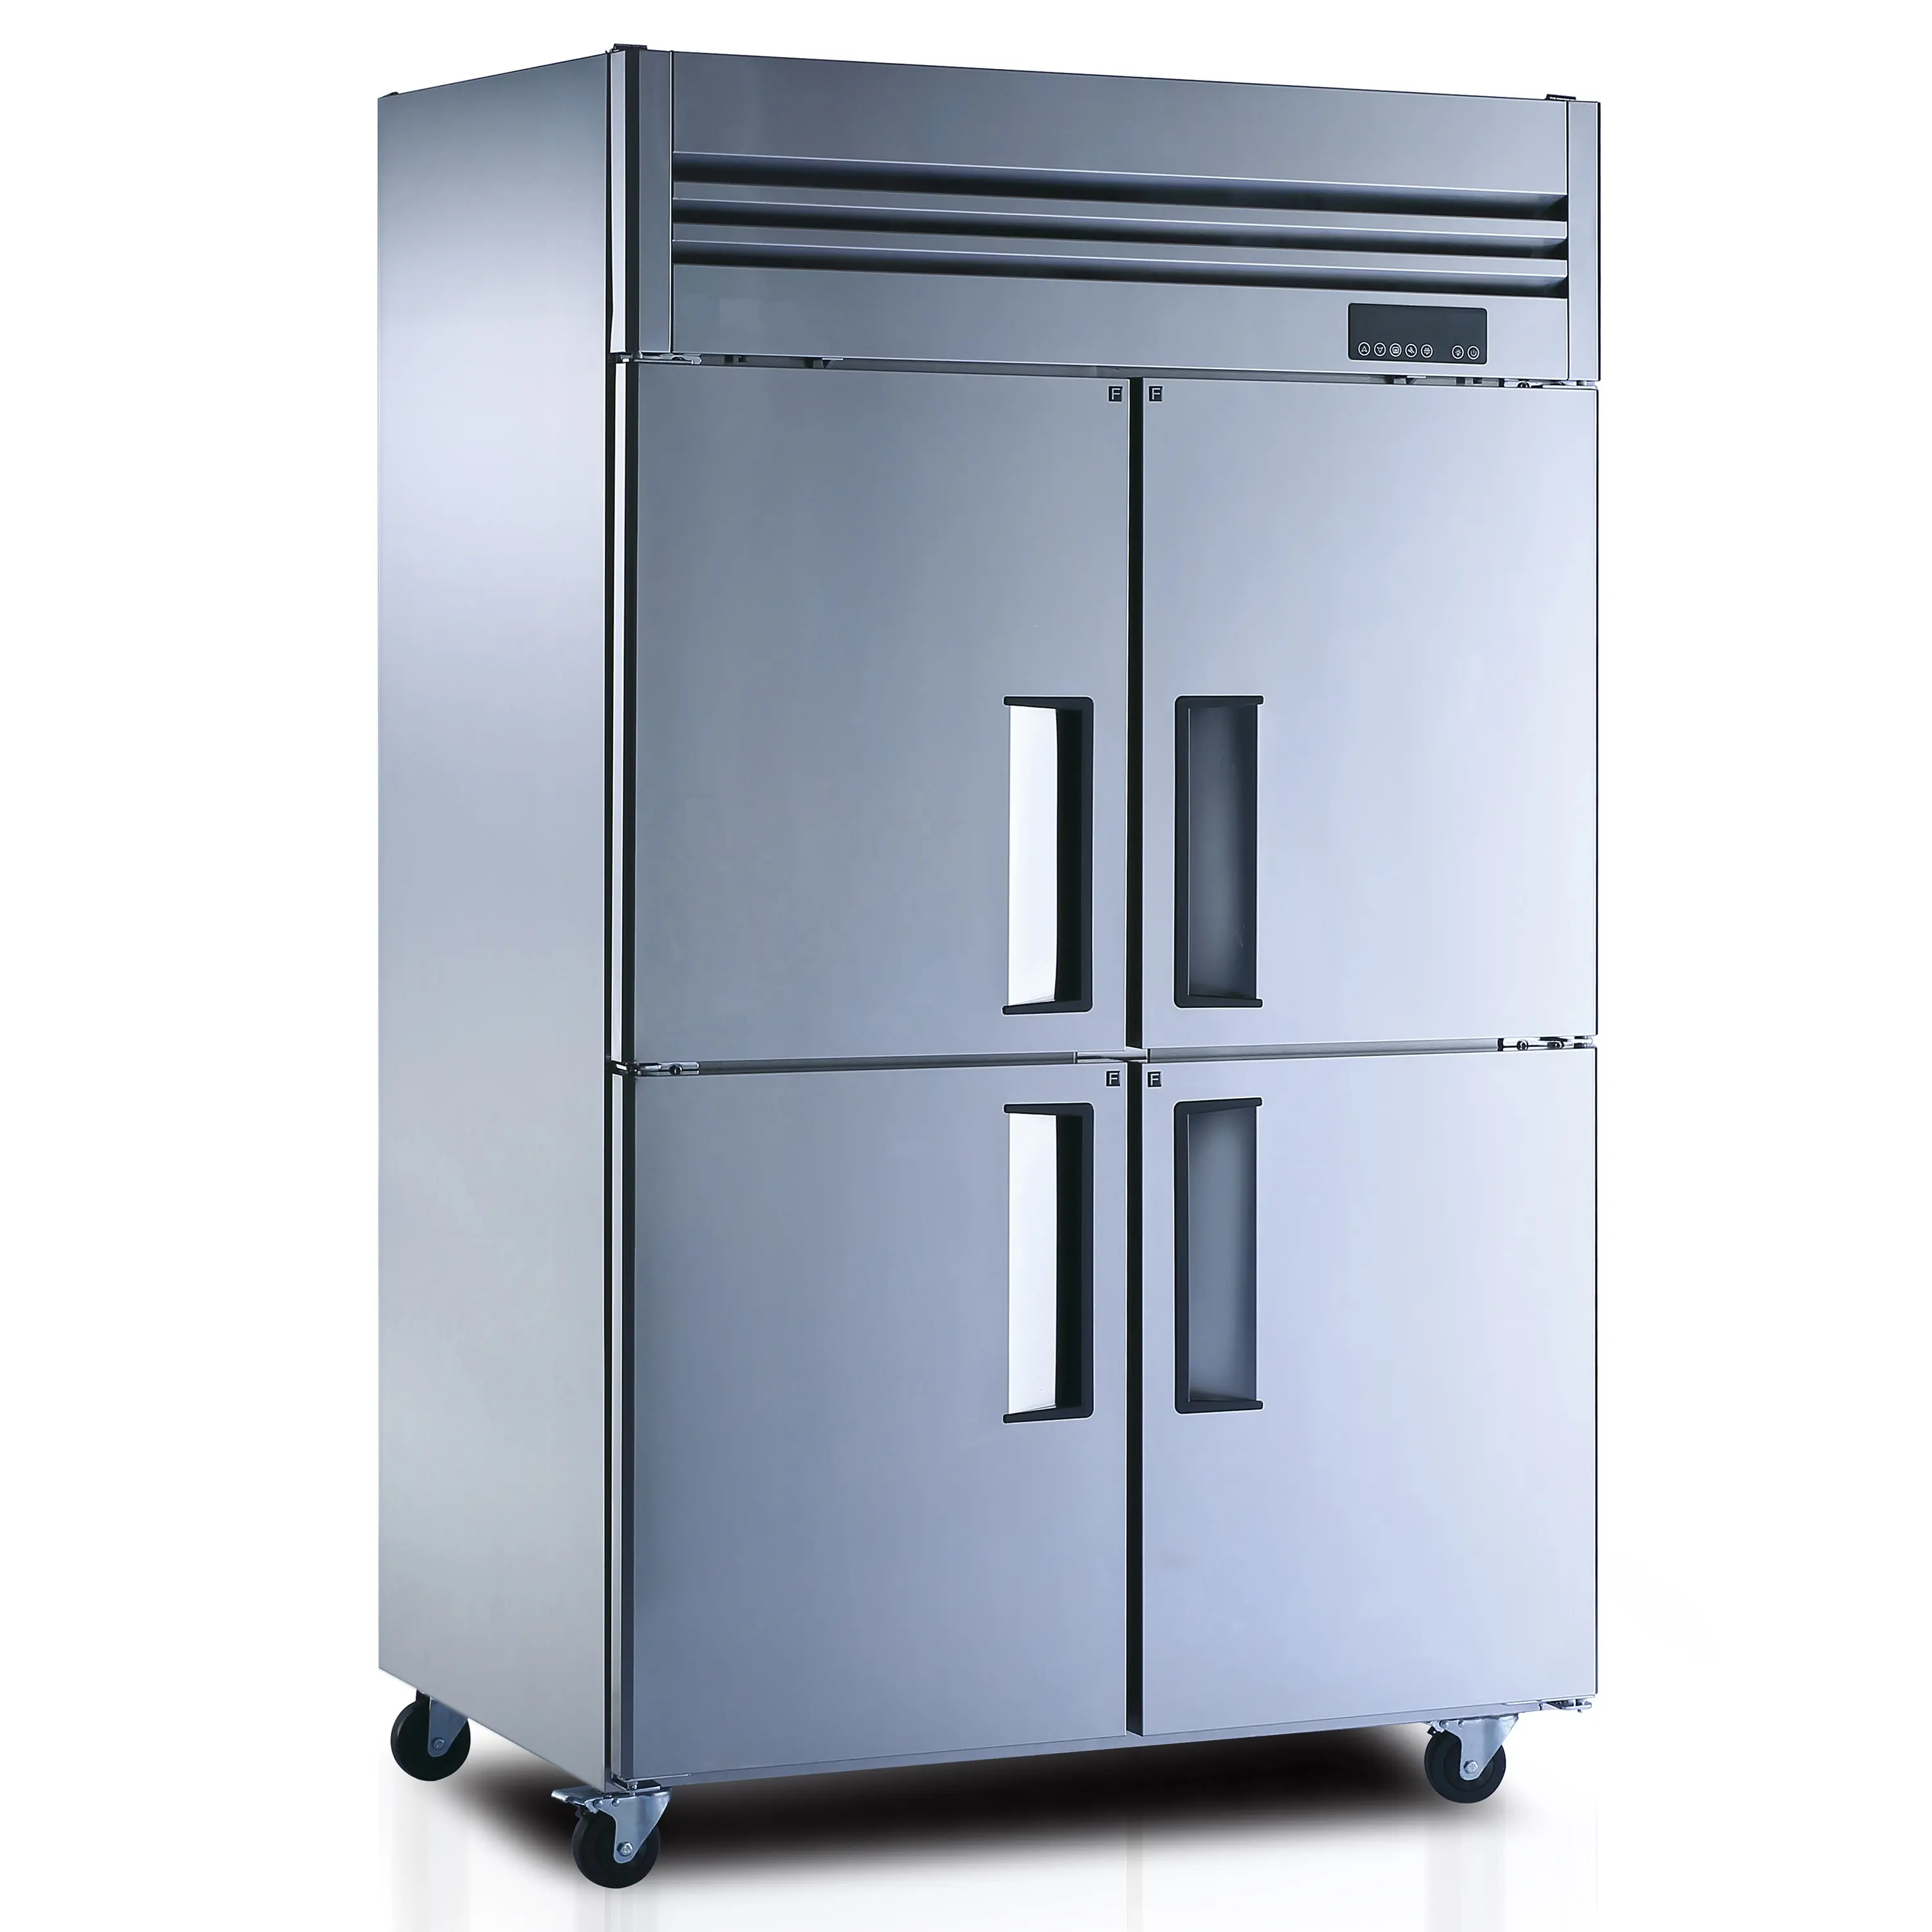 Arriart vendita calda commerciale cottura attrezzature da cucina quattro porte frigorifero congelatore verticale in acciaio inox frigo